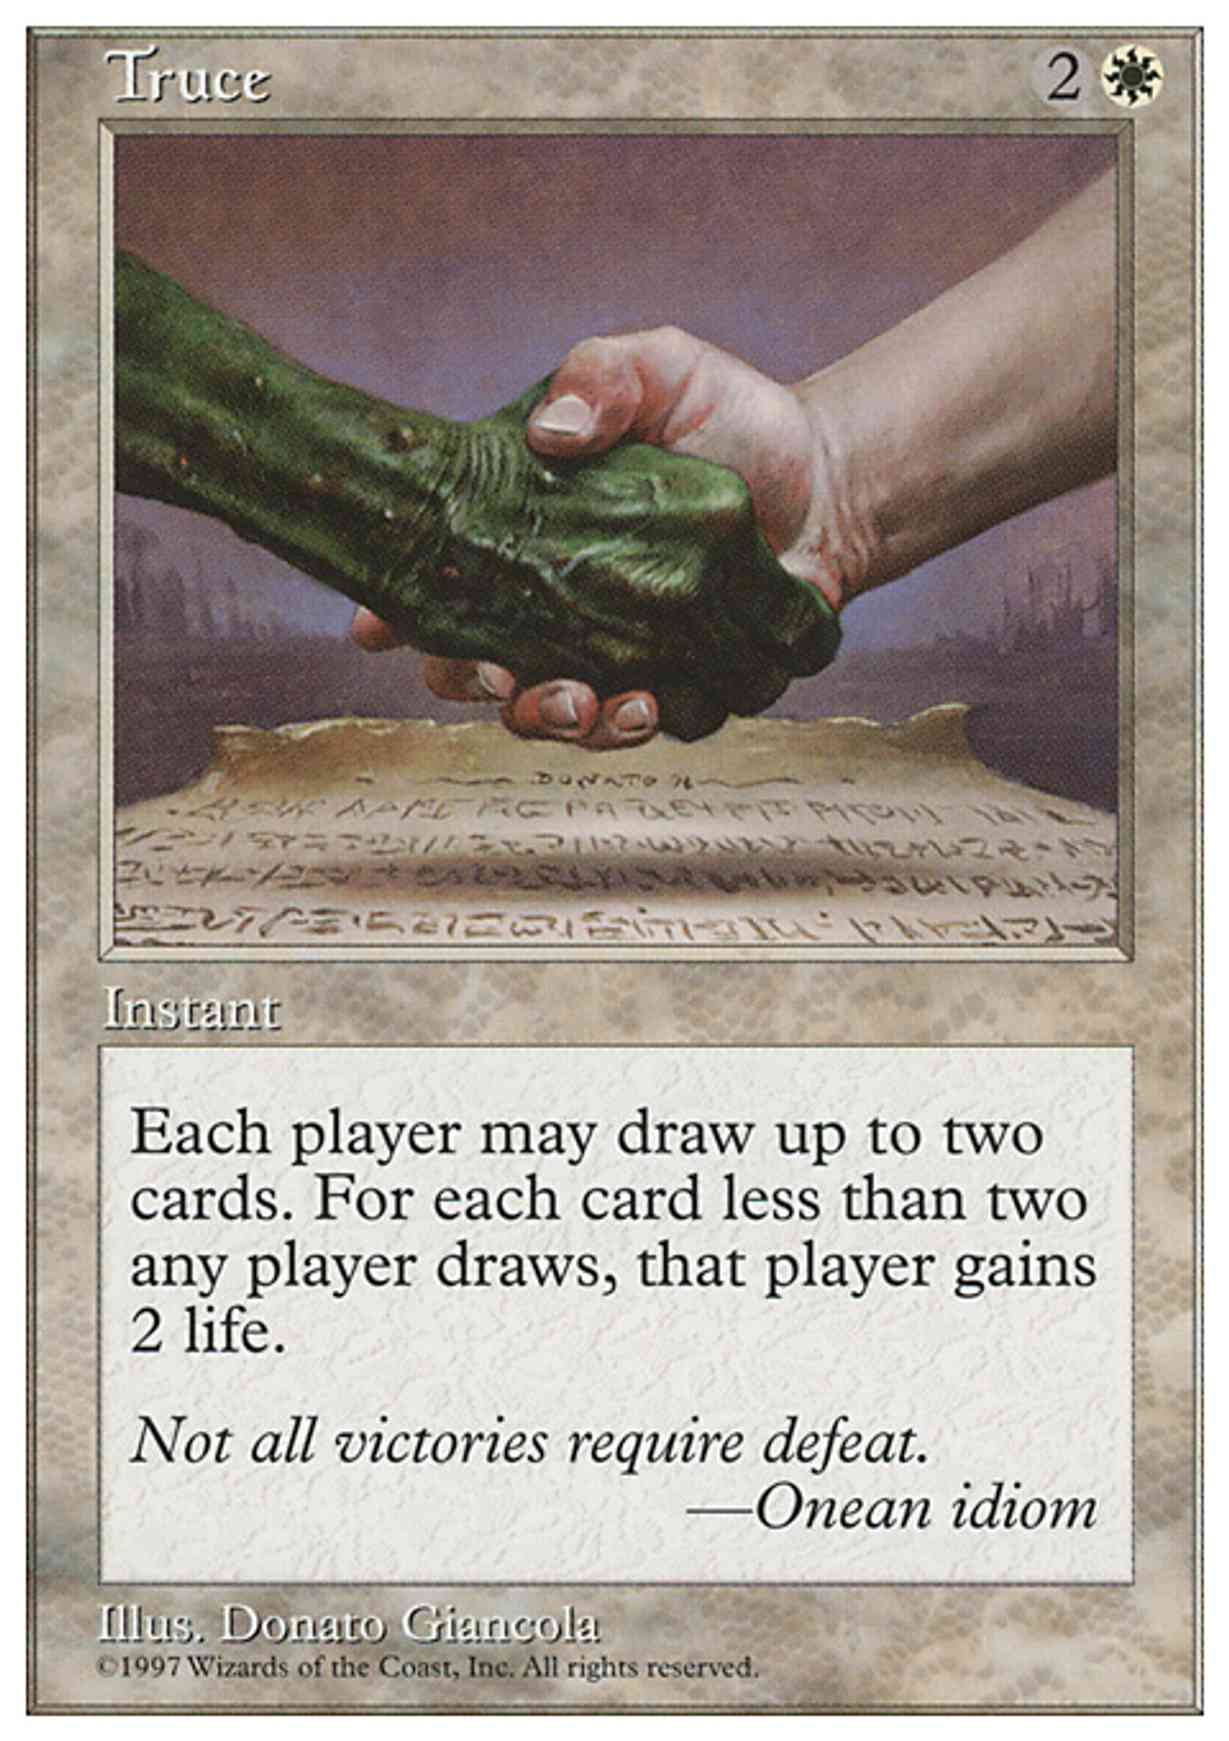 Truce magic card front